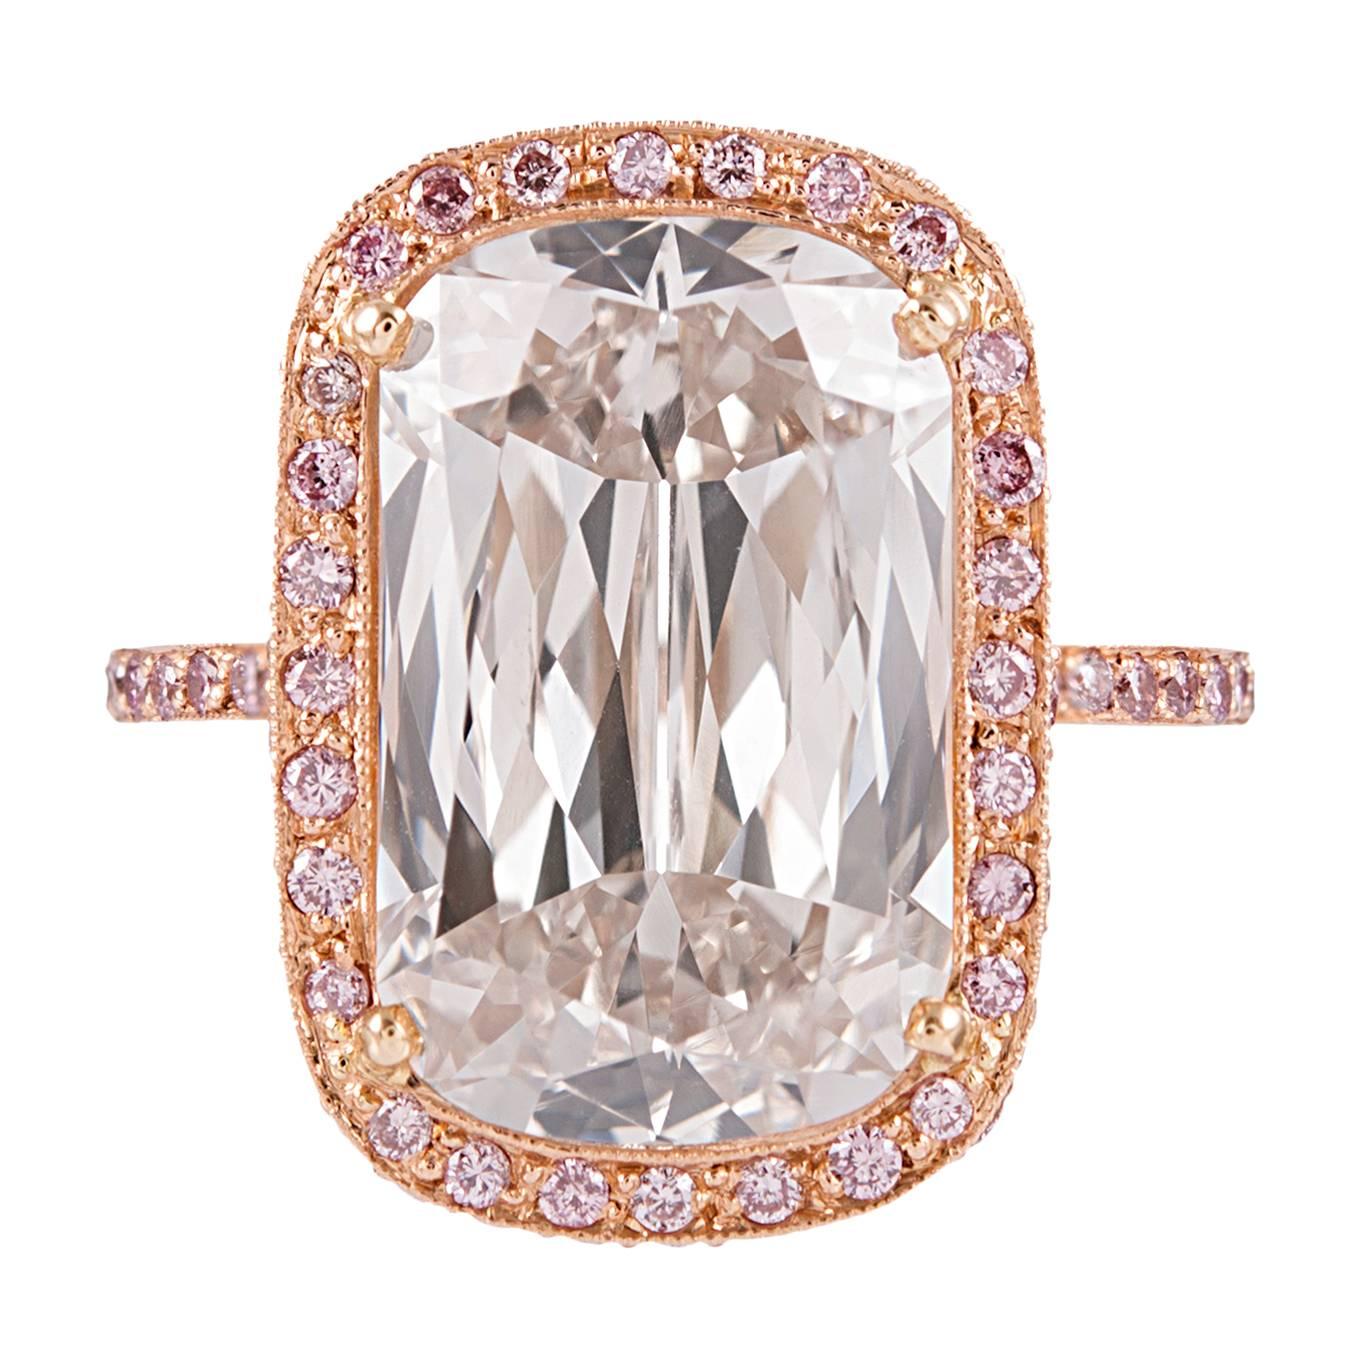 7.77 Carat Ashoka Diamond Ring with Pink Diamond Accents